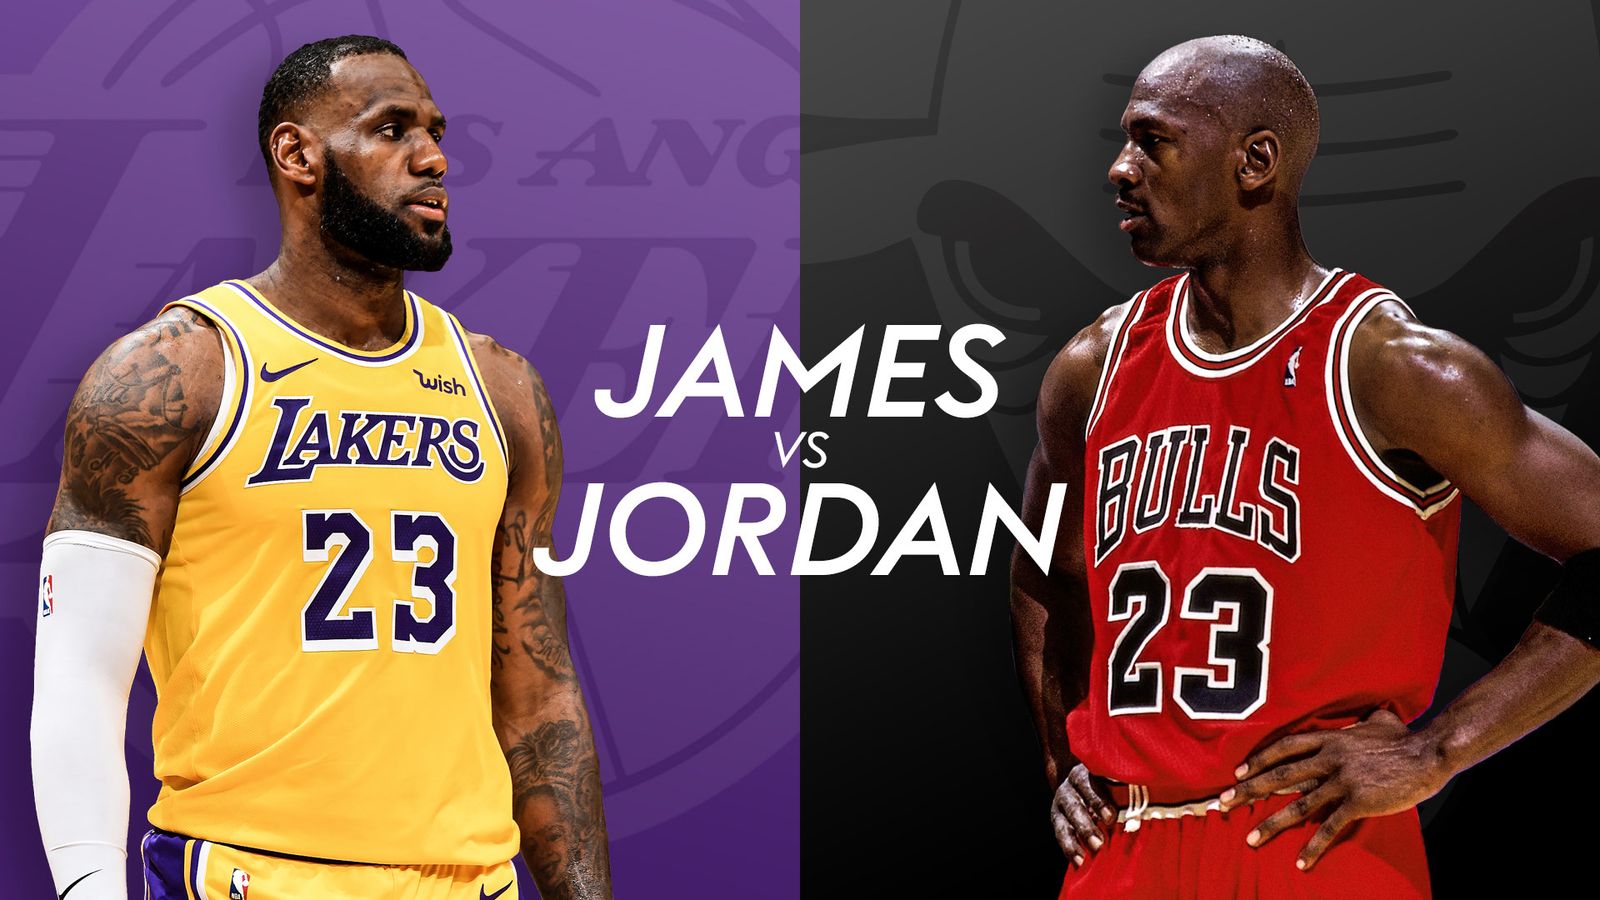 Kobe Bryant jumping into LeBron James-Michael Jordan debate is